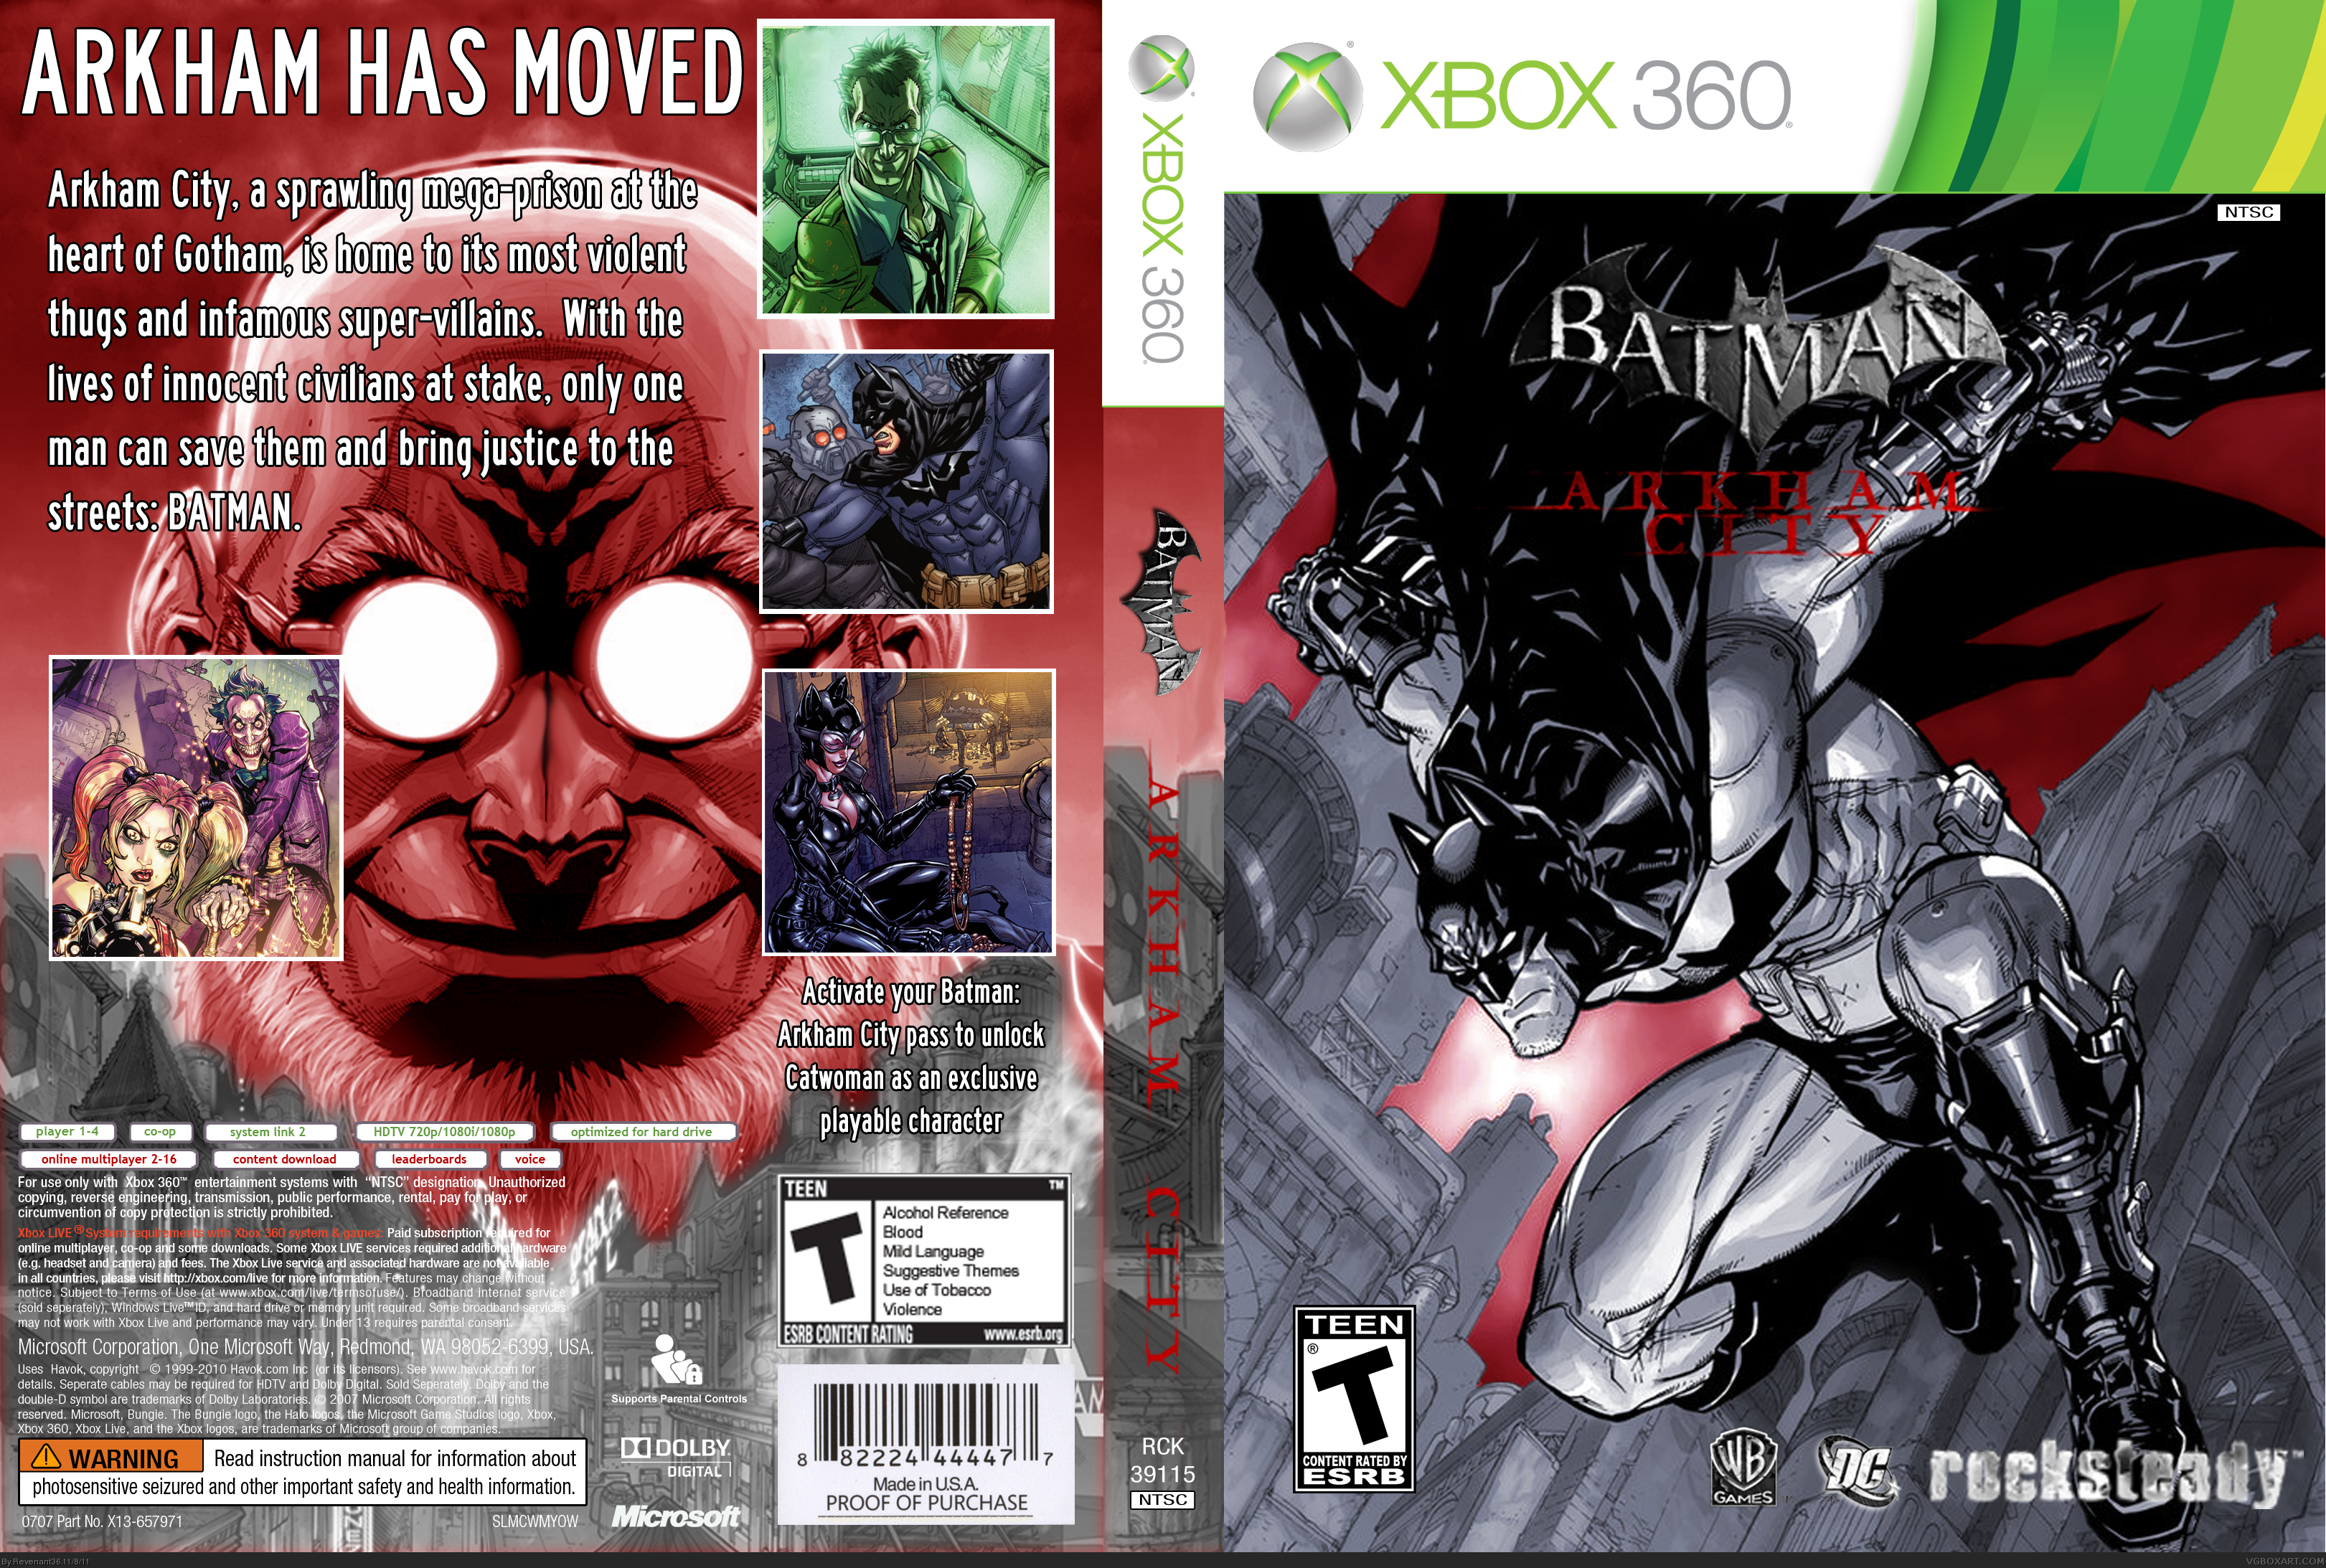 Viewing full size Batman: Arkham City box cover.